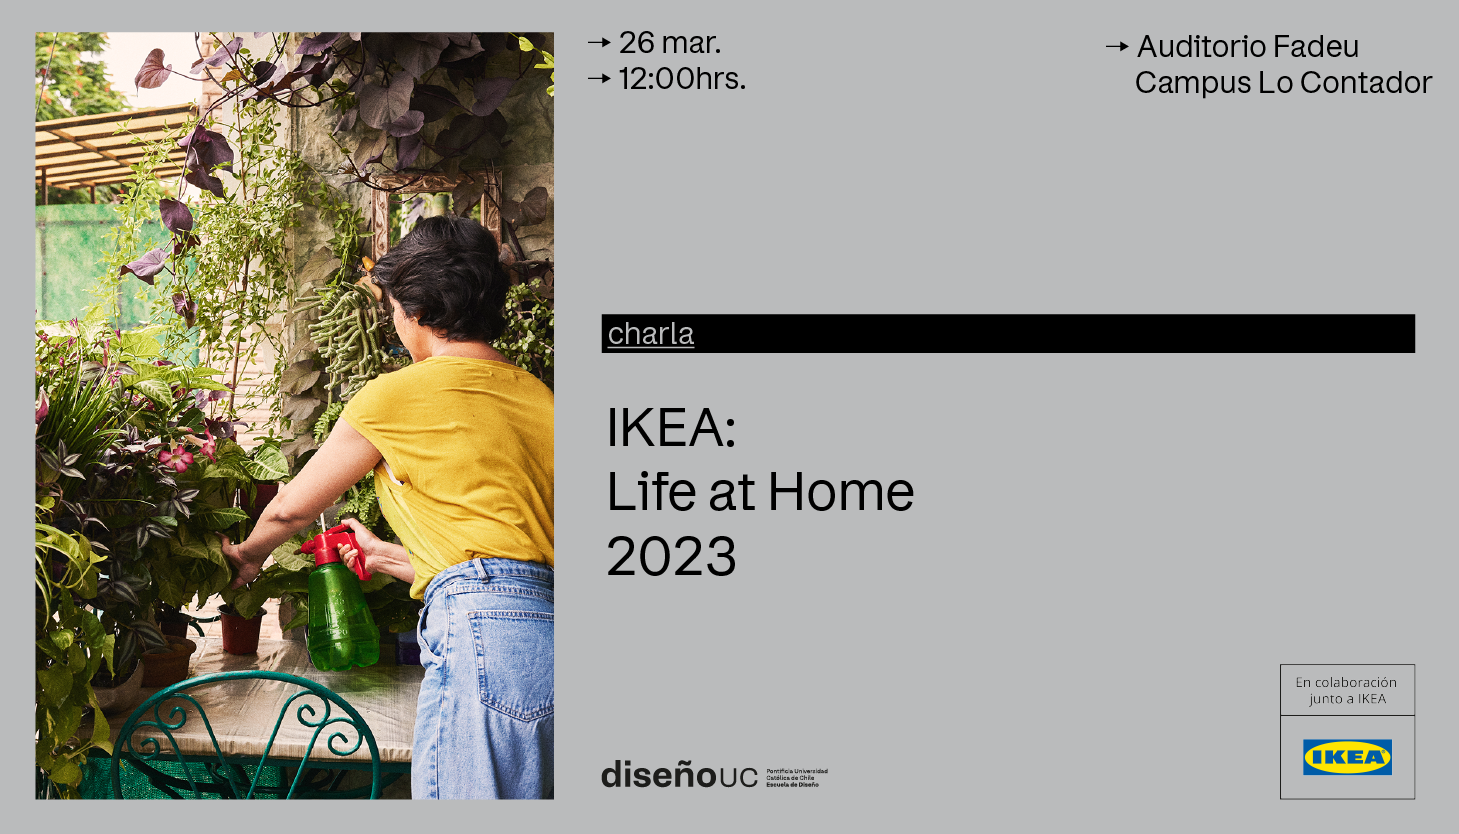 CHARLA | IKEA LIFE AT HOME 2023